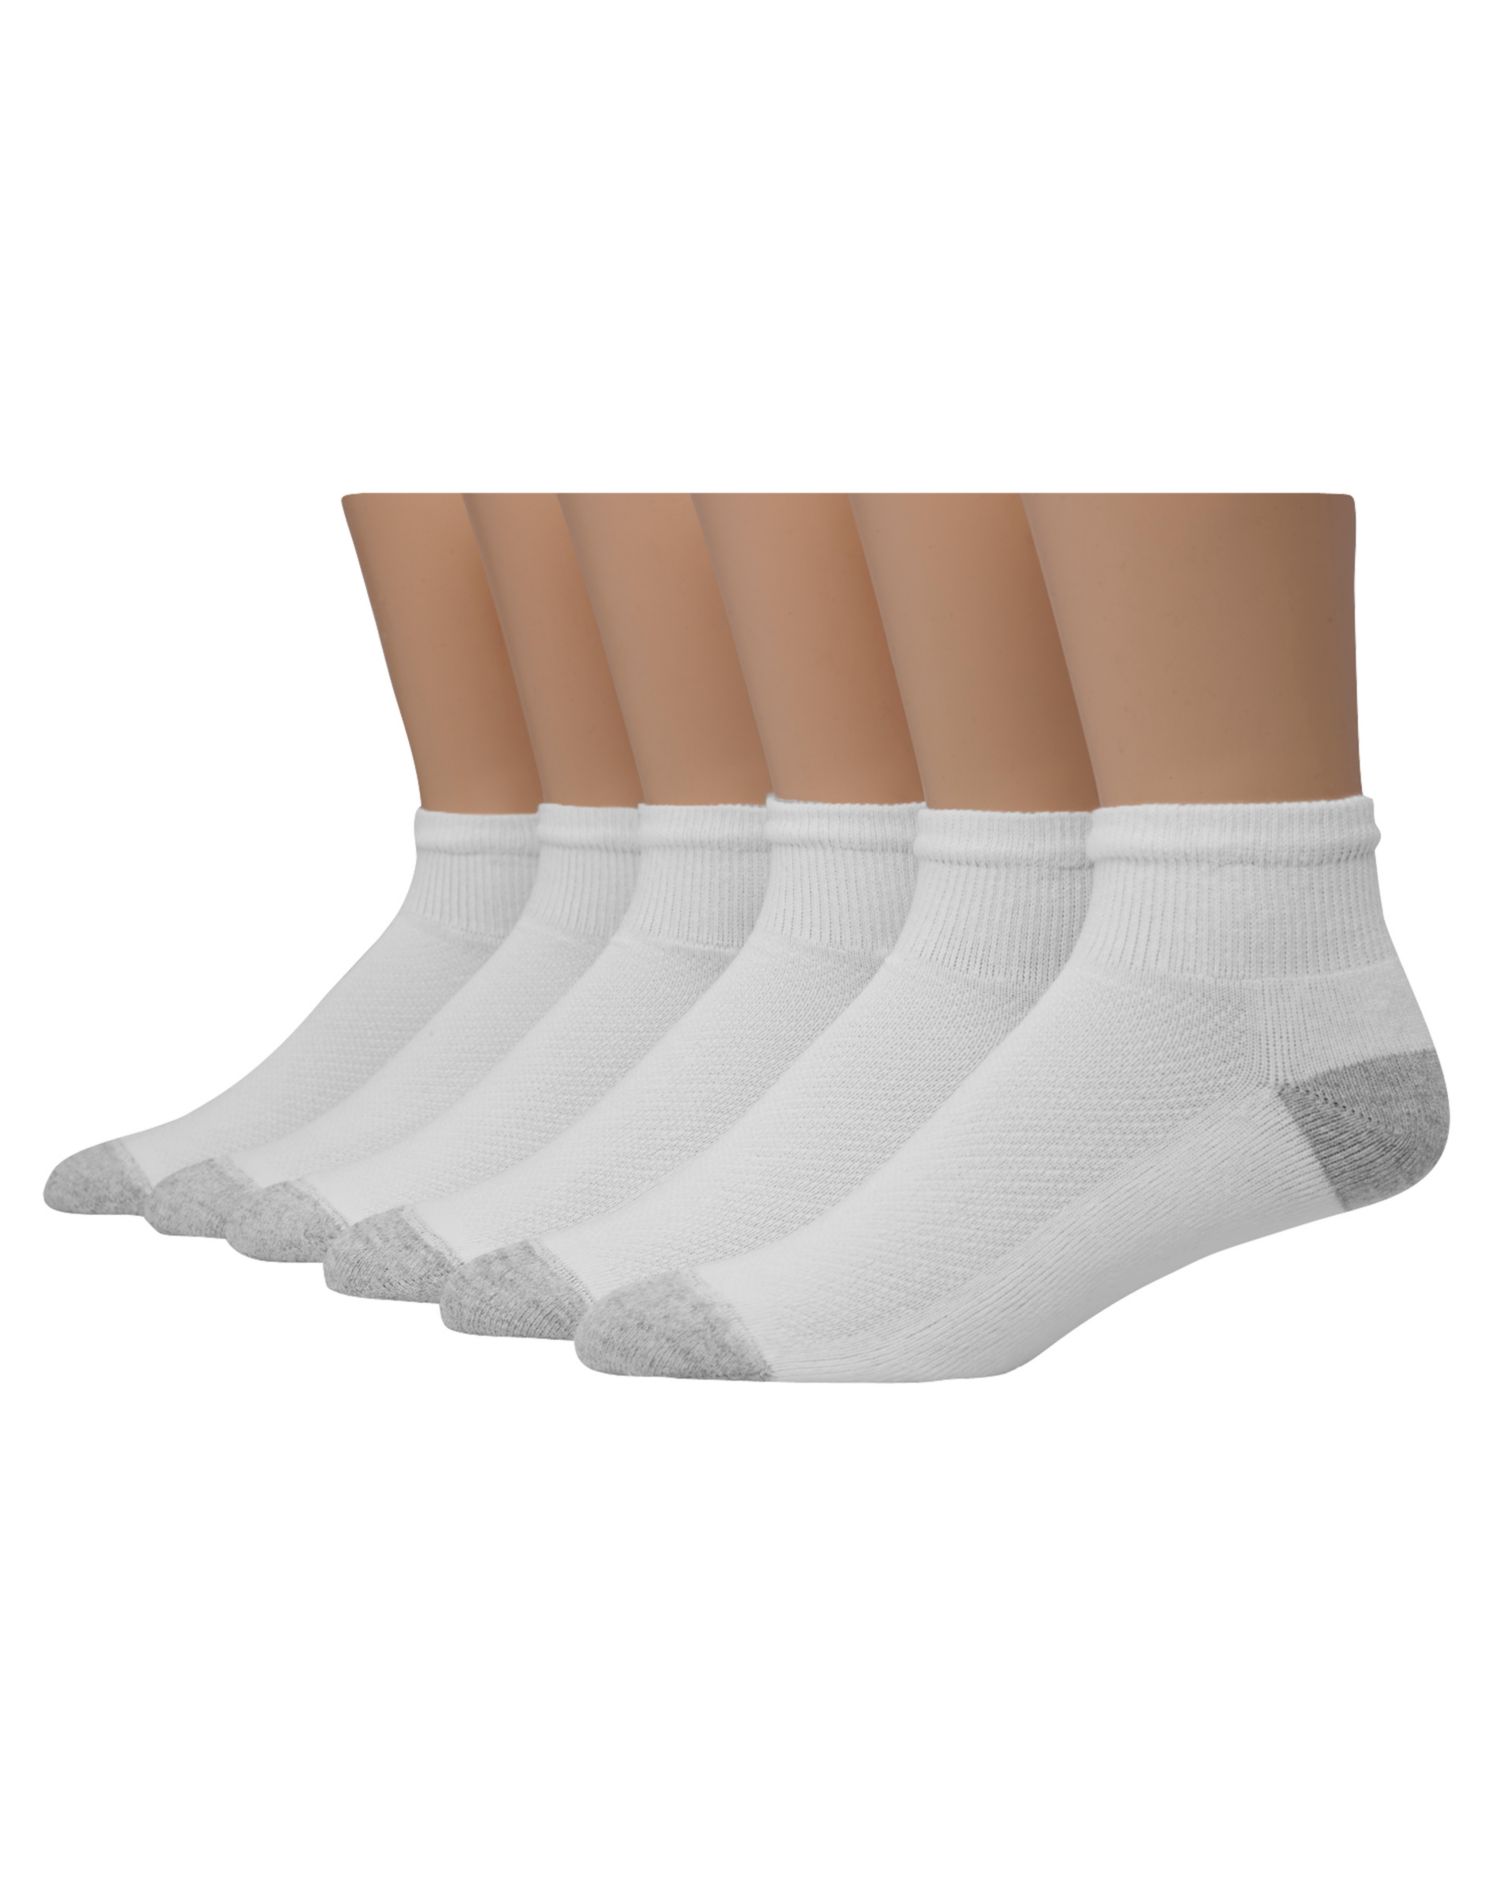 Hanes Mens Ultimate X Temp FreshIQ Ankle Socks Pack Apparel Direct Distributor